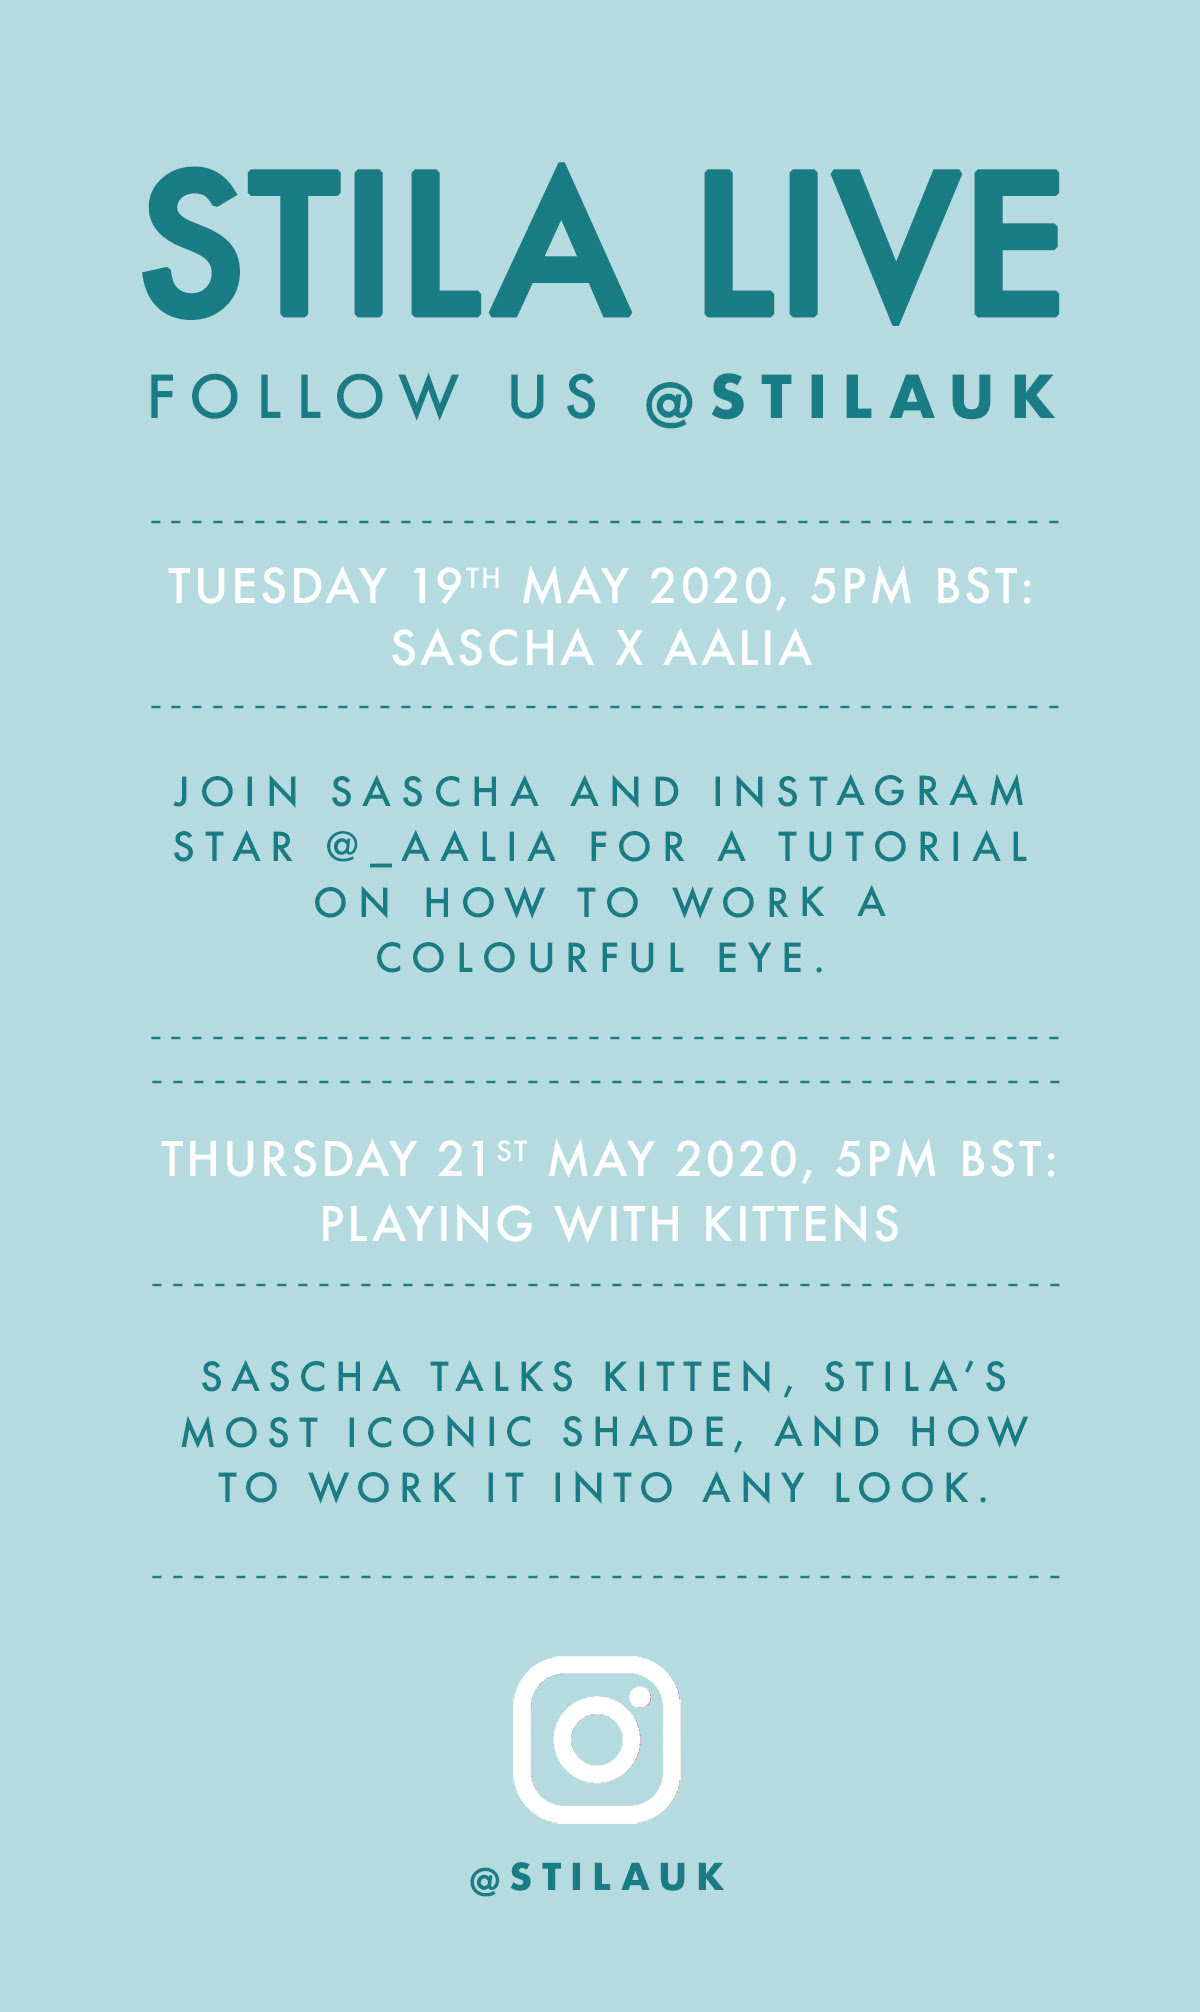 Stila UK - This week's LIVE with STILA schedule